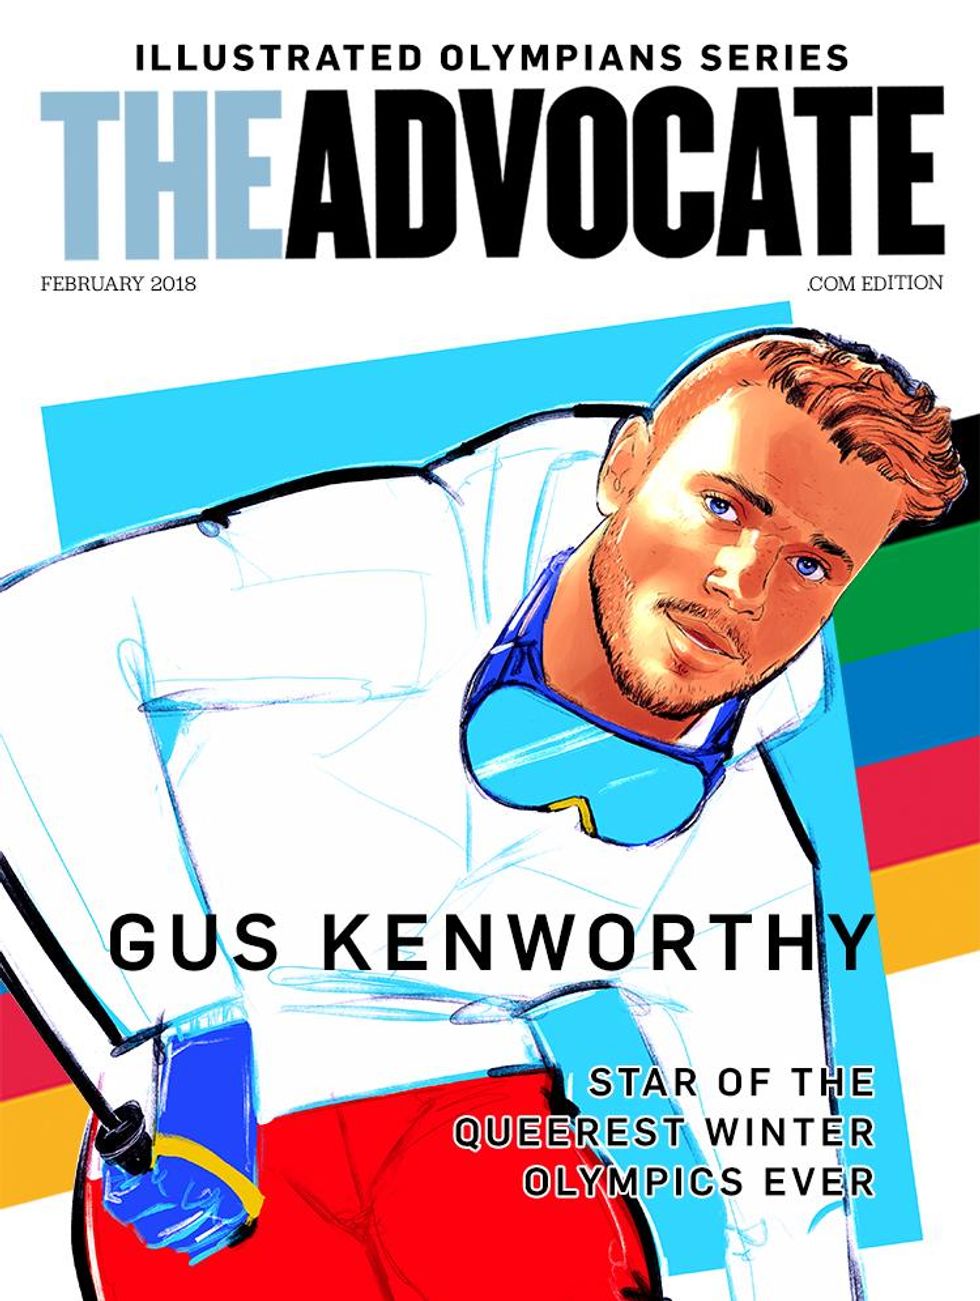 Gus-kenworthy-cover-750x